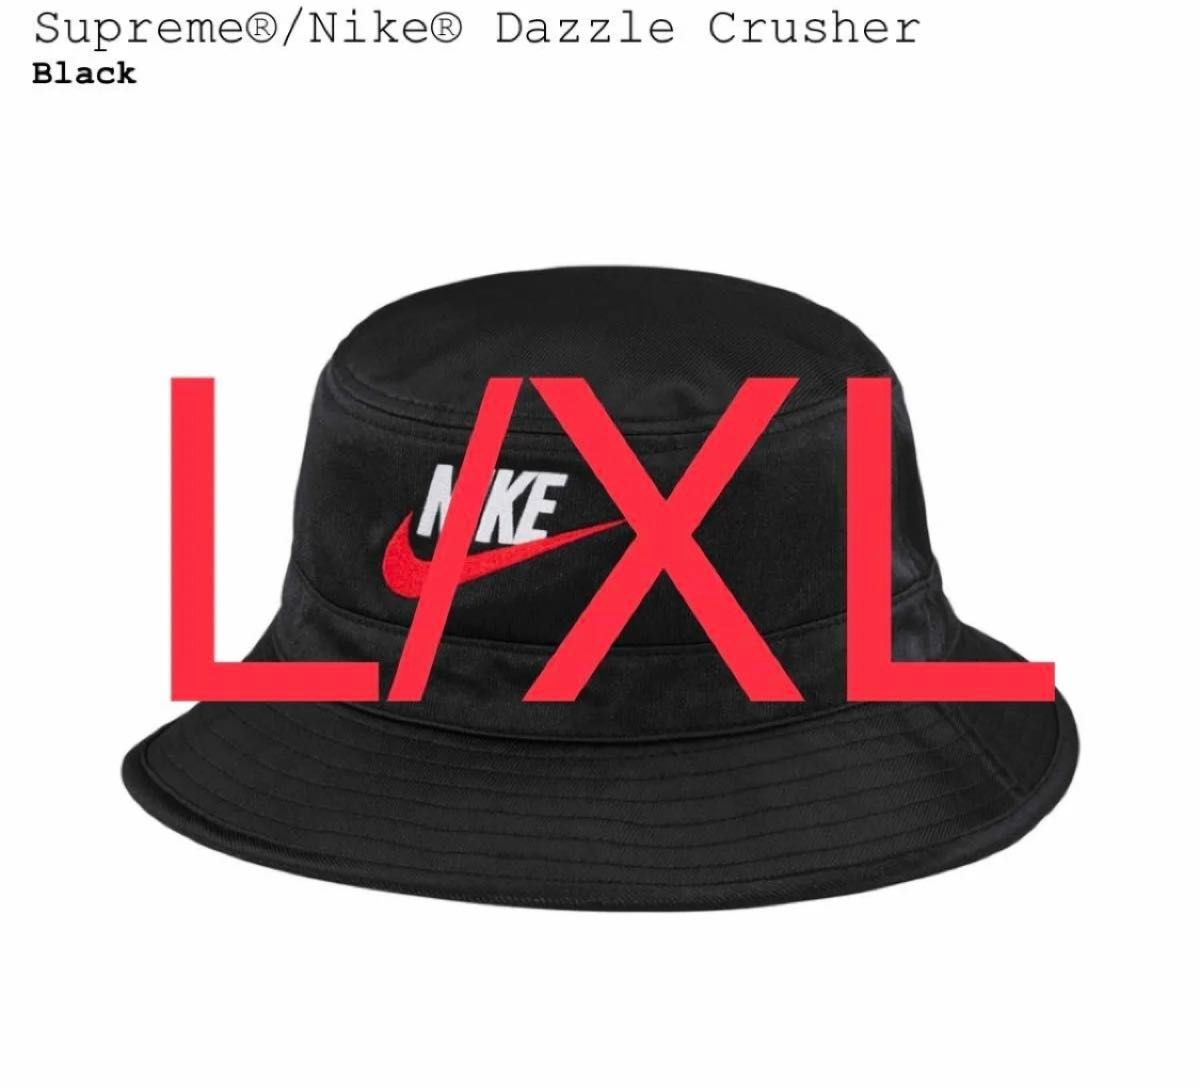 Supreme x Nike Dazzle Crusher "Black" L/XL